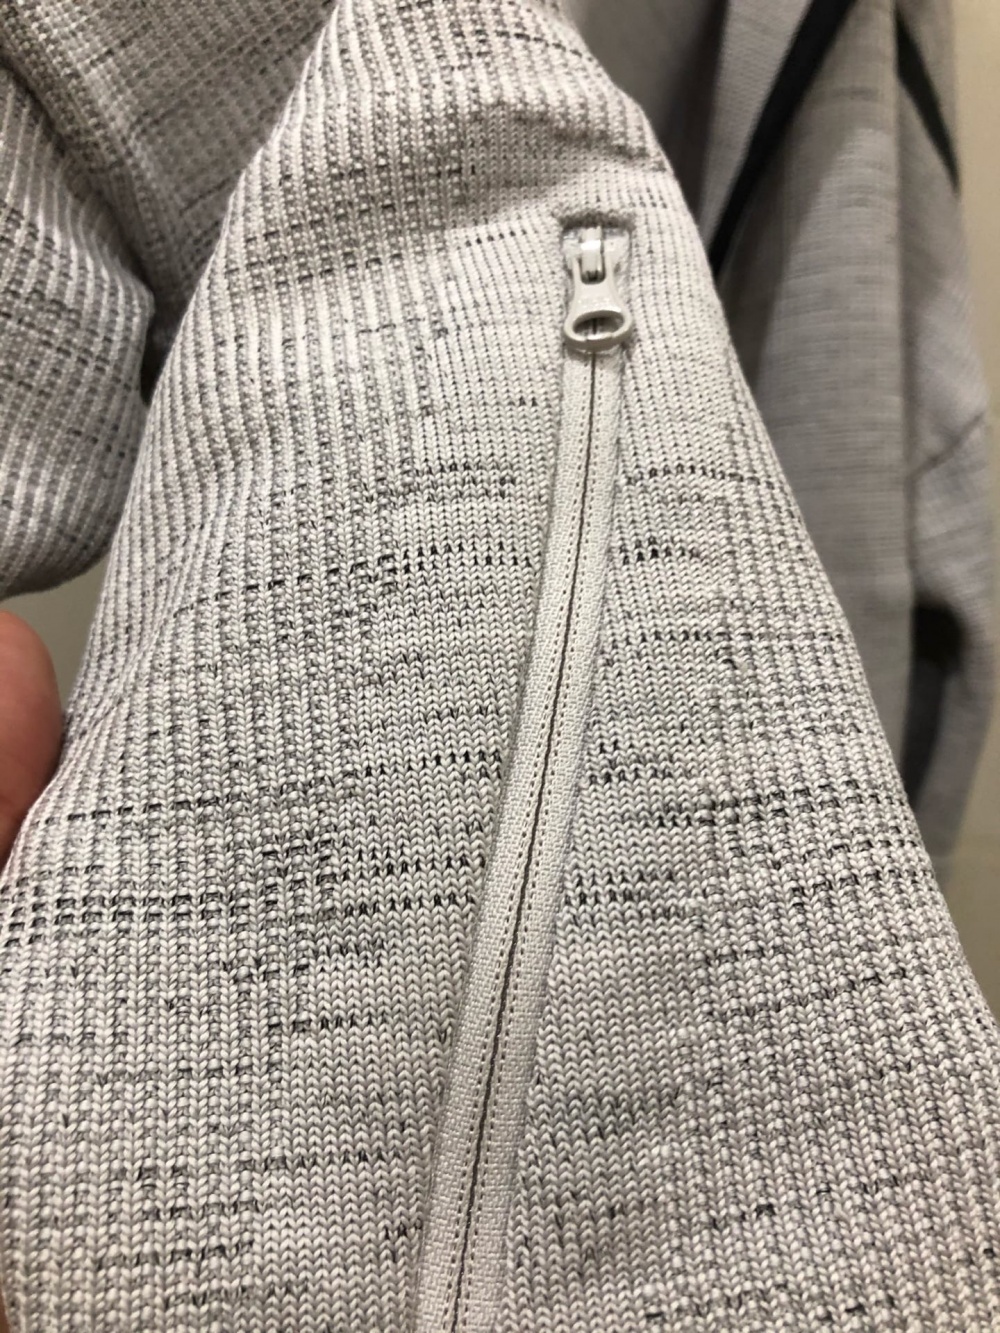 Зип-худи Аdidas Men's sweatshirt ZNE Primeknit Размер М-L.